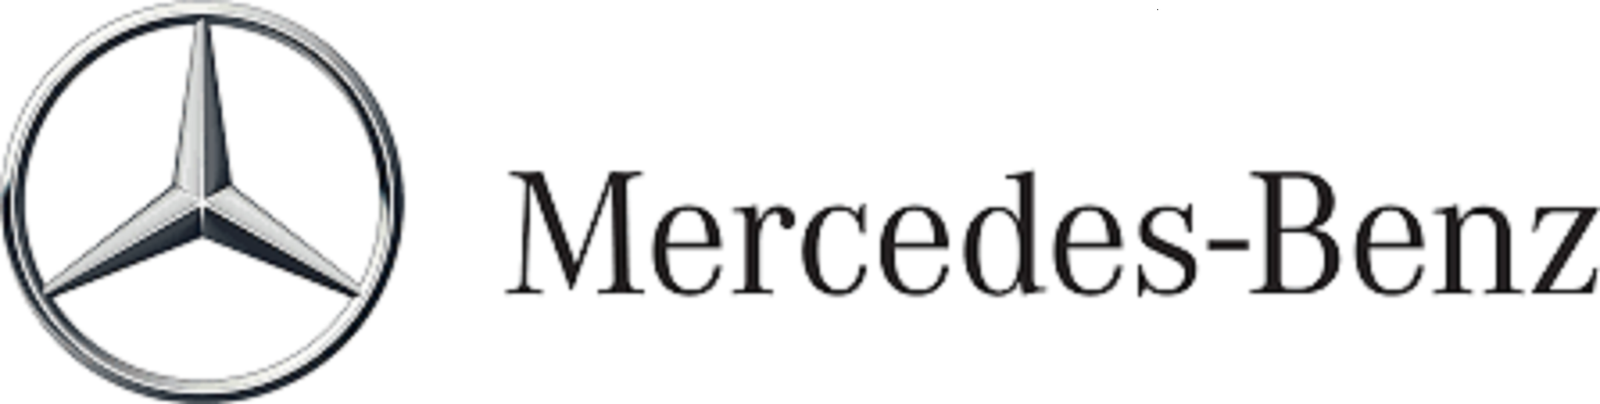 Mercedes Benz Recruitment